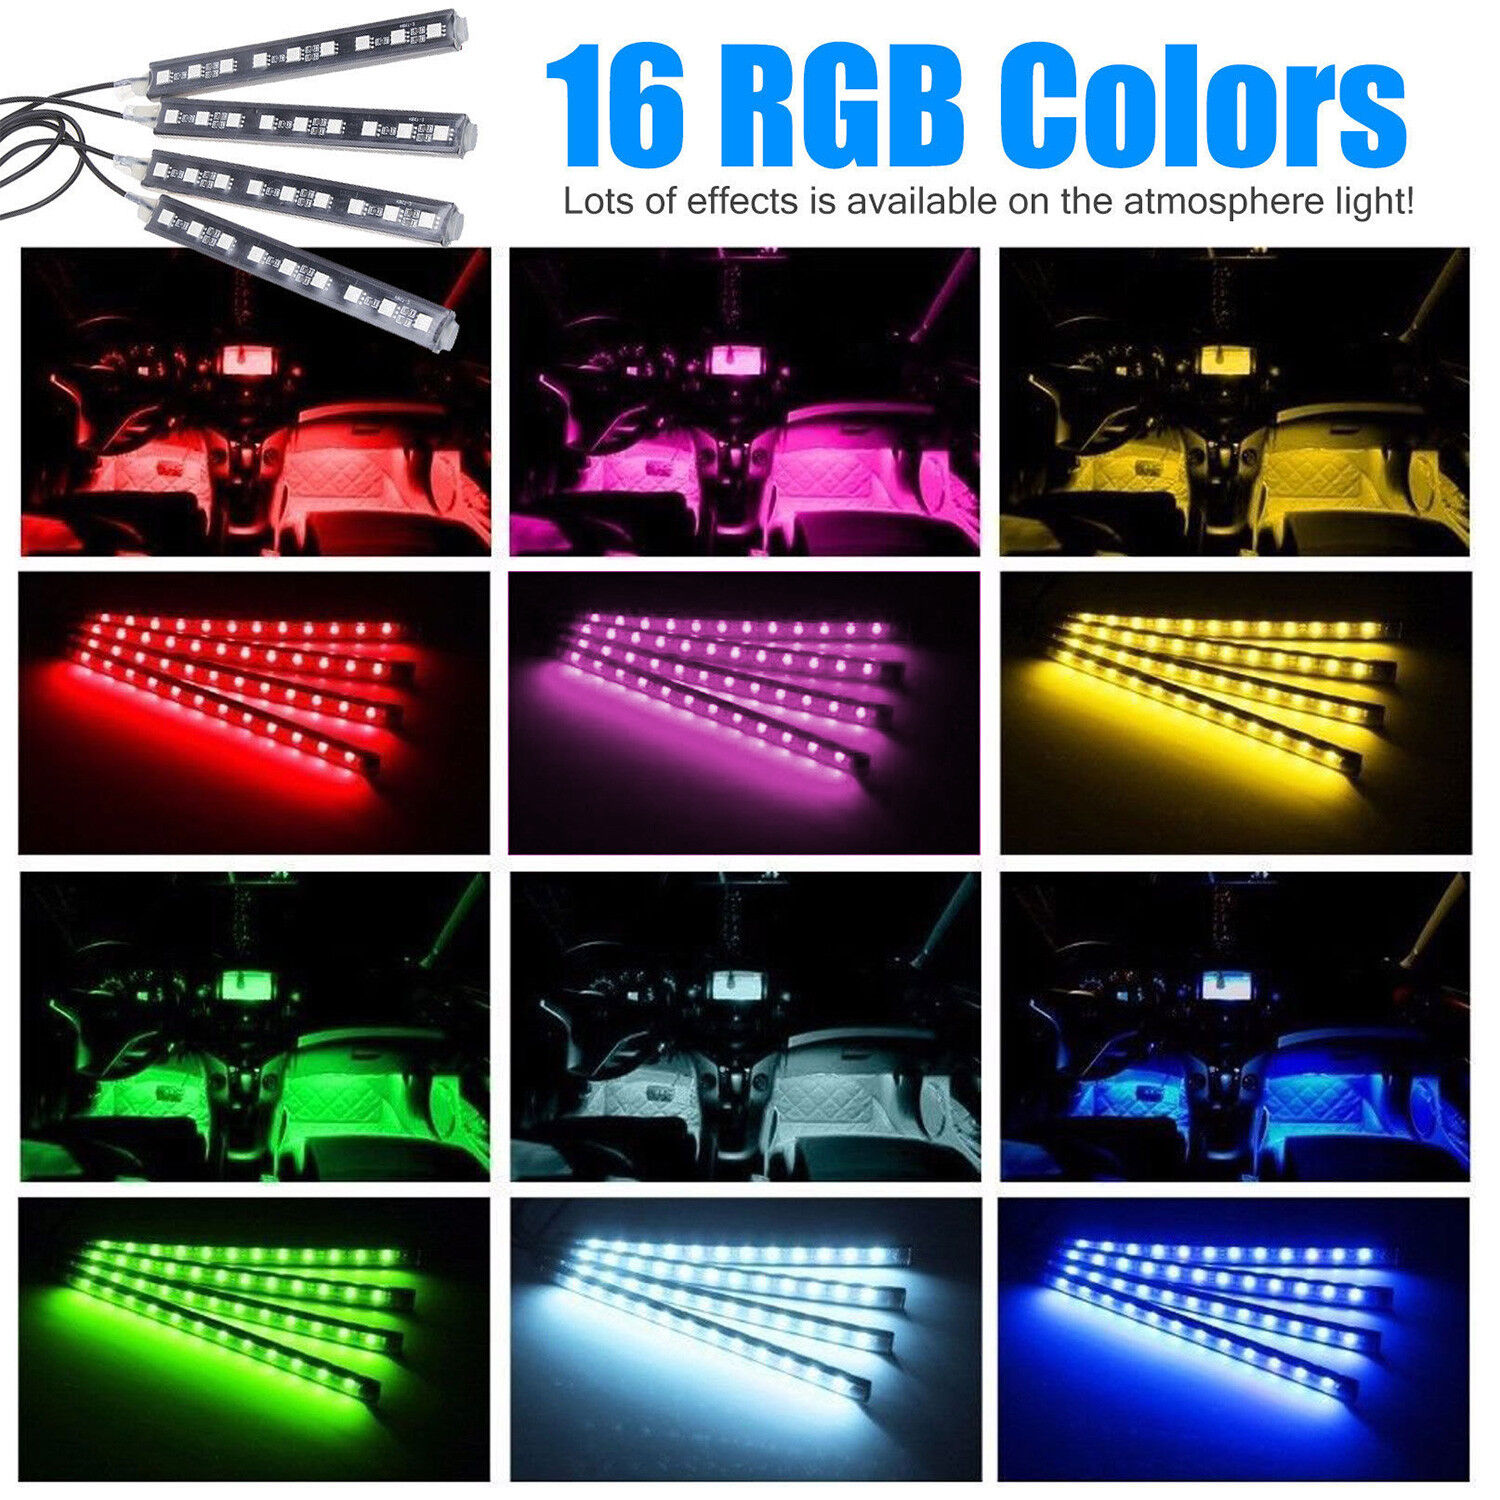 4x 5050SMD 9 LED RGB Car Strip Light Interior Decorative Colorful Remote Control